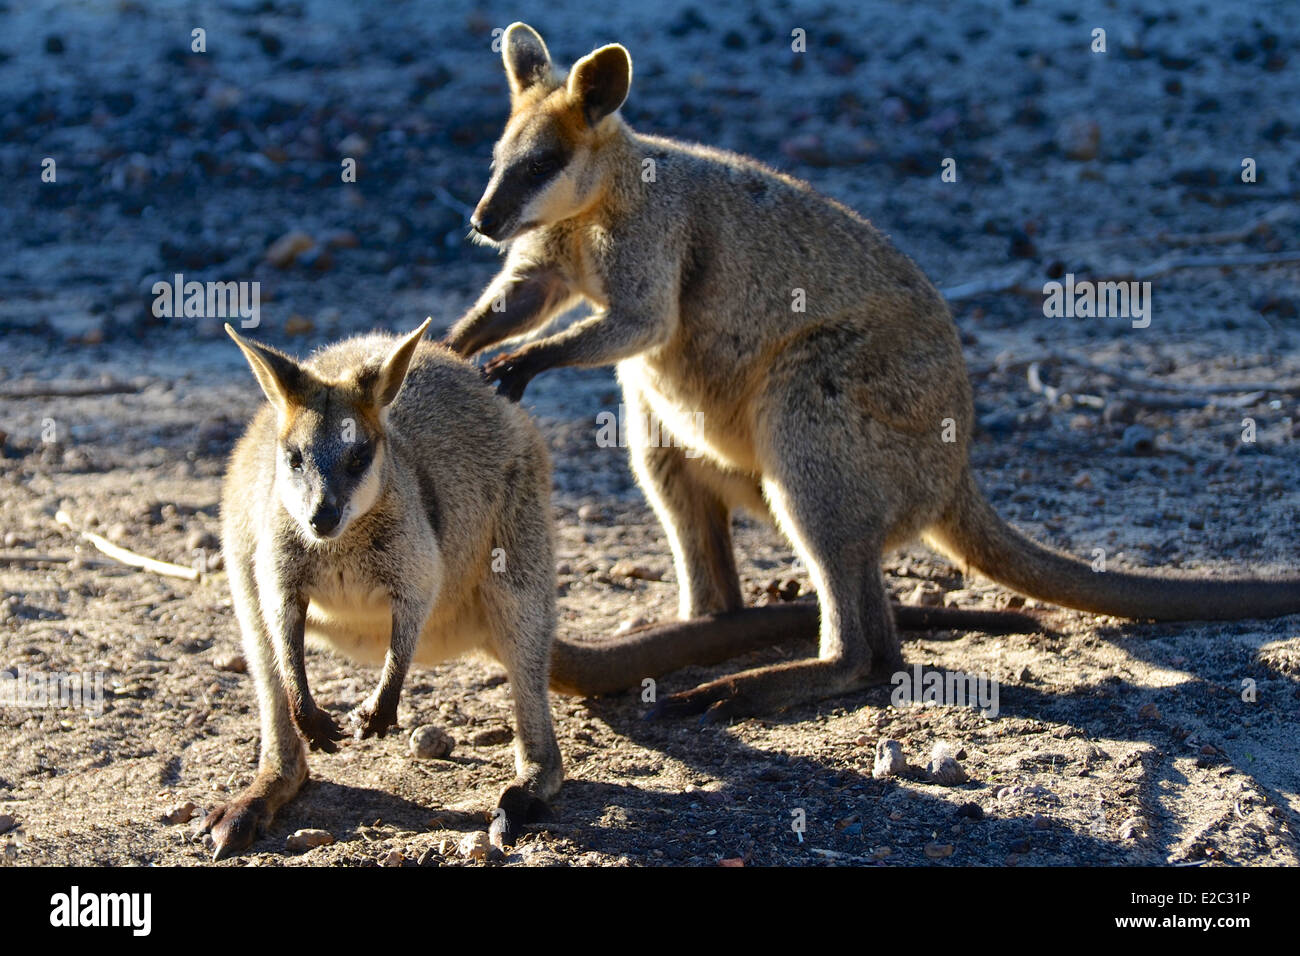 Two wallabies enjoying the sunshine. Not to be mistaken for kangaroos, wallabies are smaller marsupials native to Australia. Stock Photo